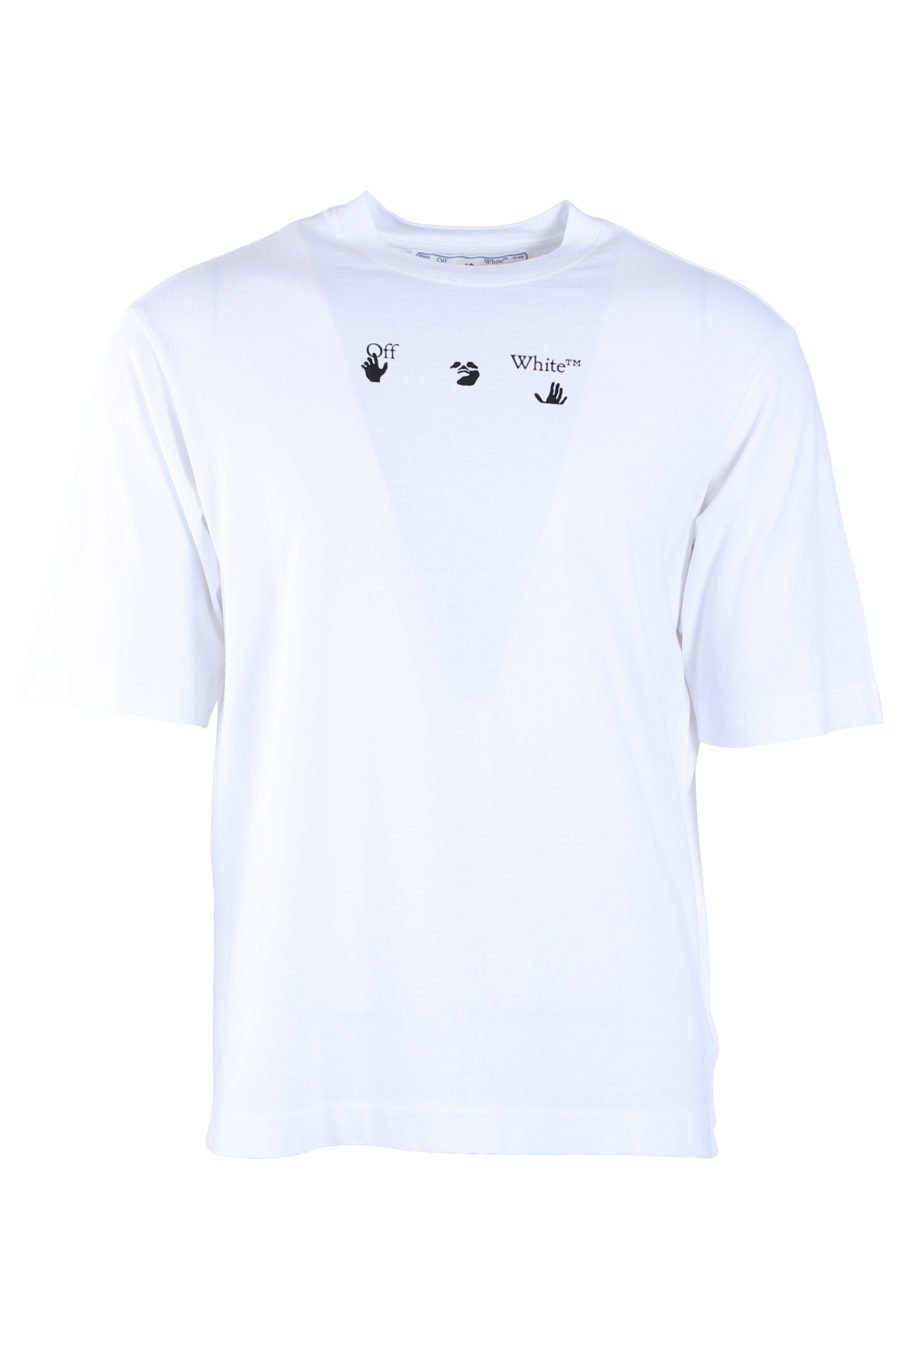 Camiseta blanca con motivo "Arrows" - IMG 9117